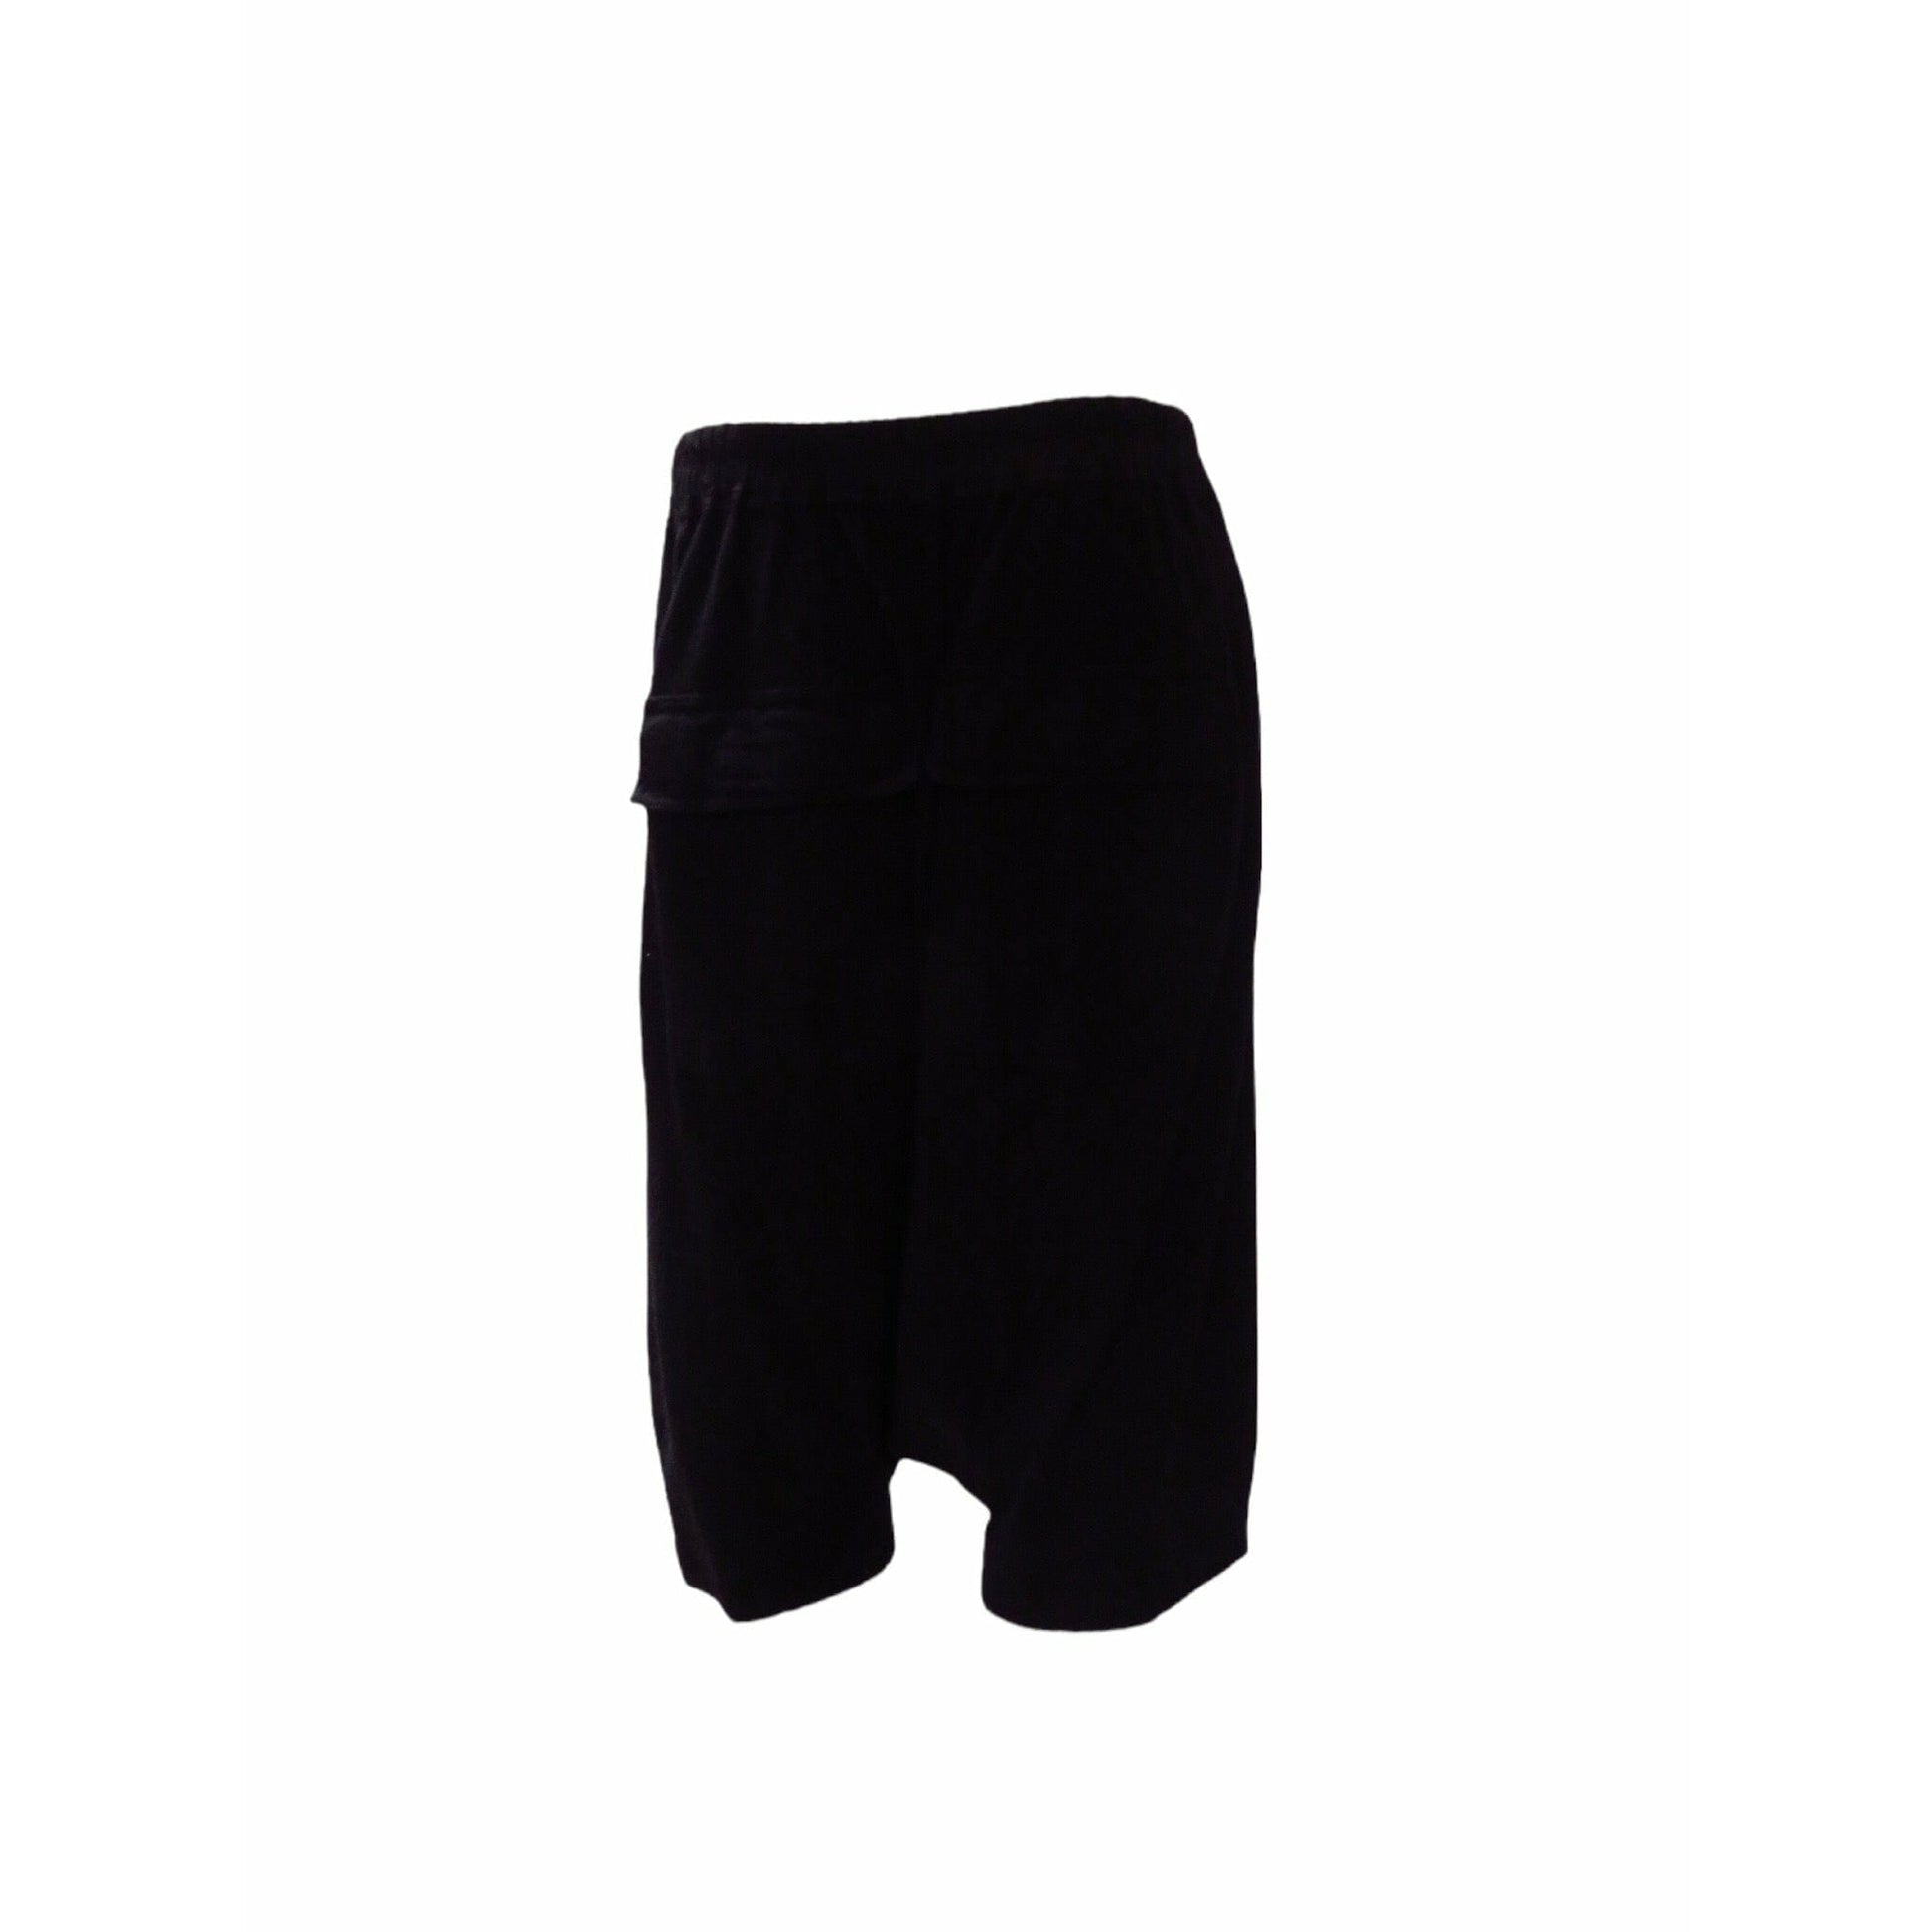 rick-owens-drkshdw-pod-shorts Shorts Black